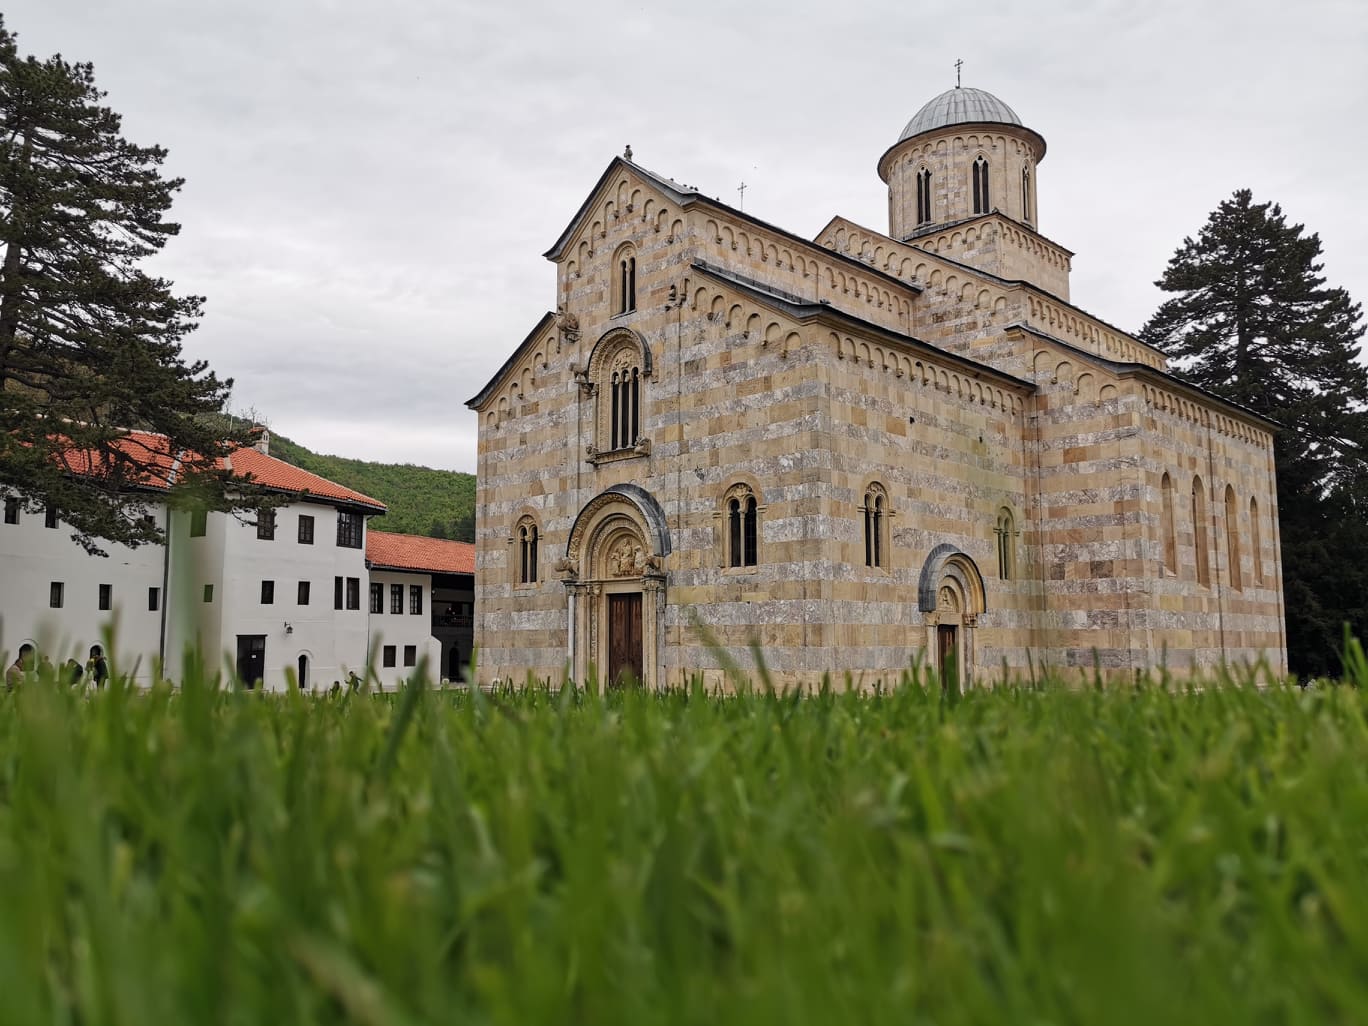 Rode: Prištinske vlasti bez odlaganja da vrate zemljište manastiru Visoki Dečani